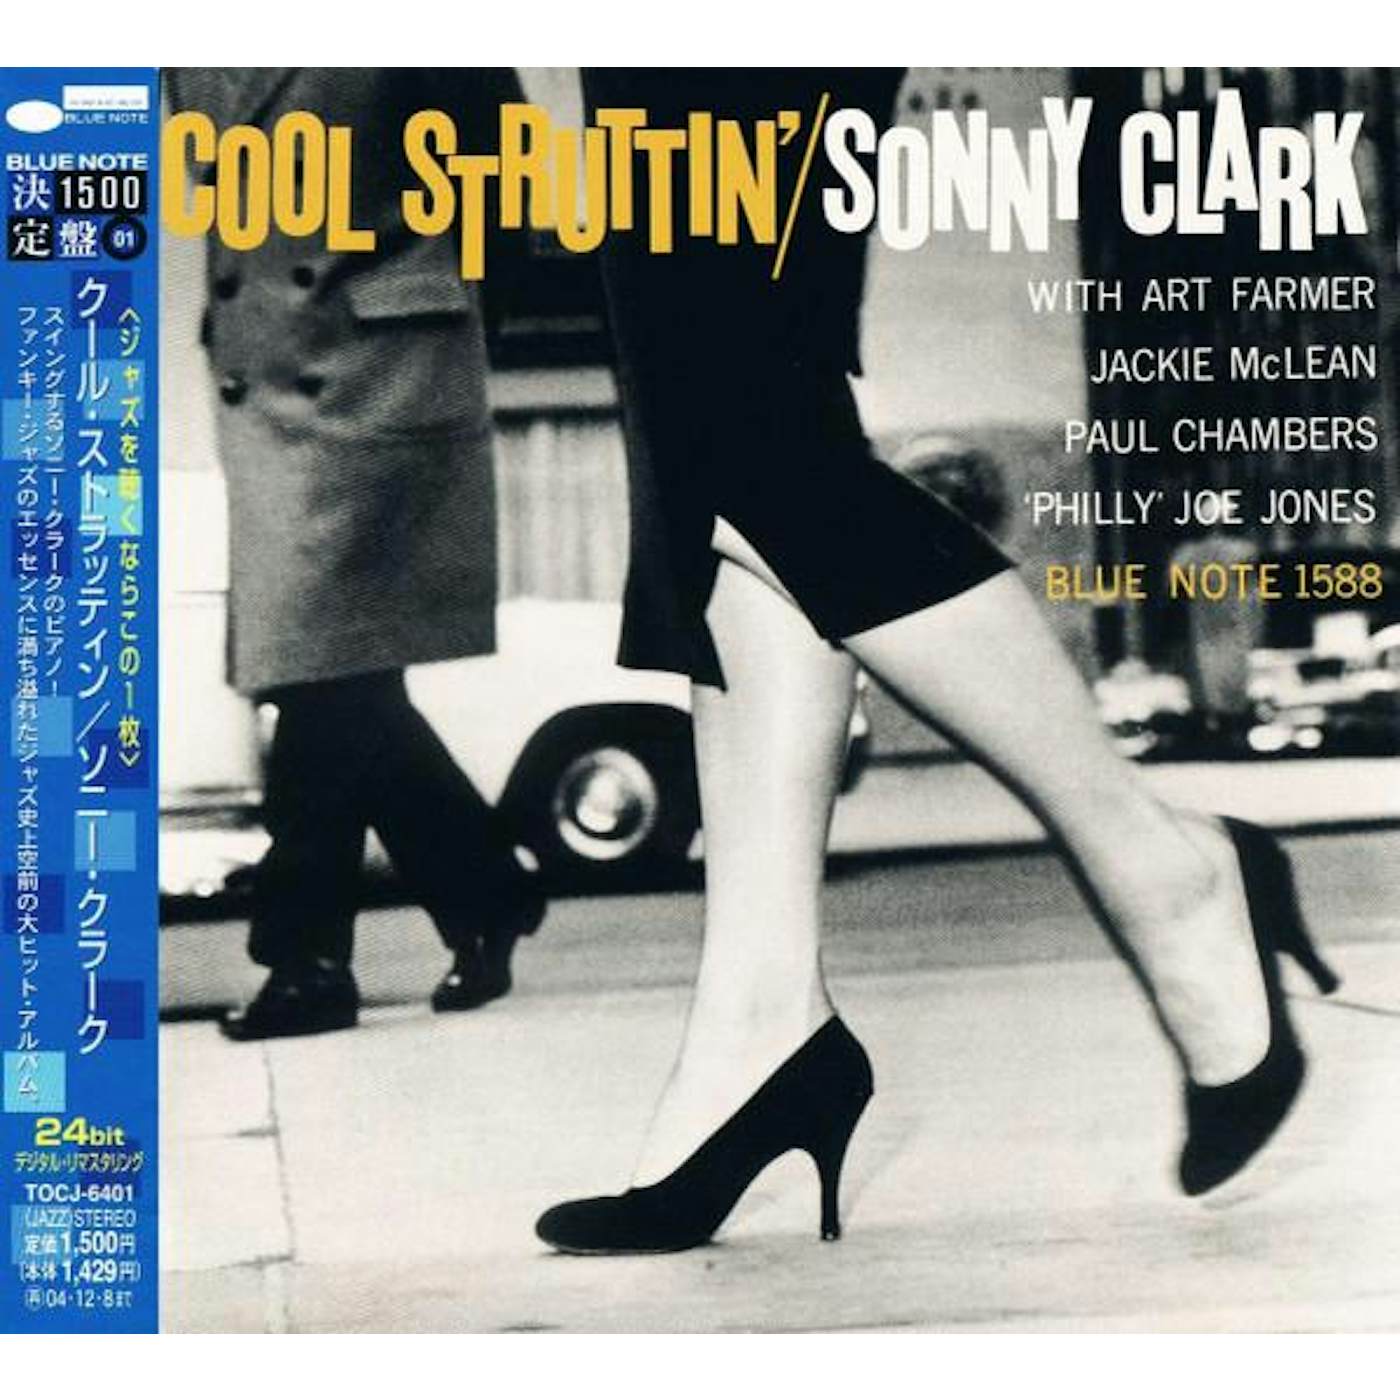 Sonny Clark COOL STRITTIN' CD